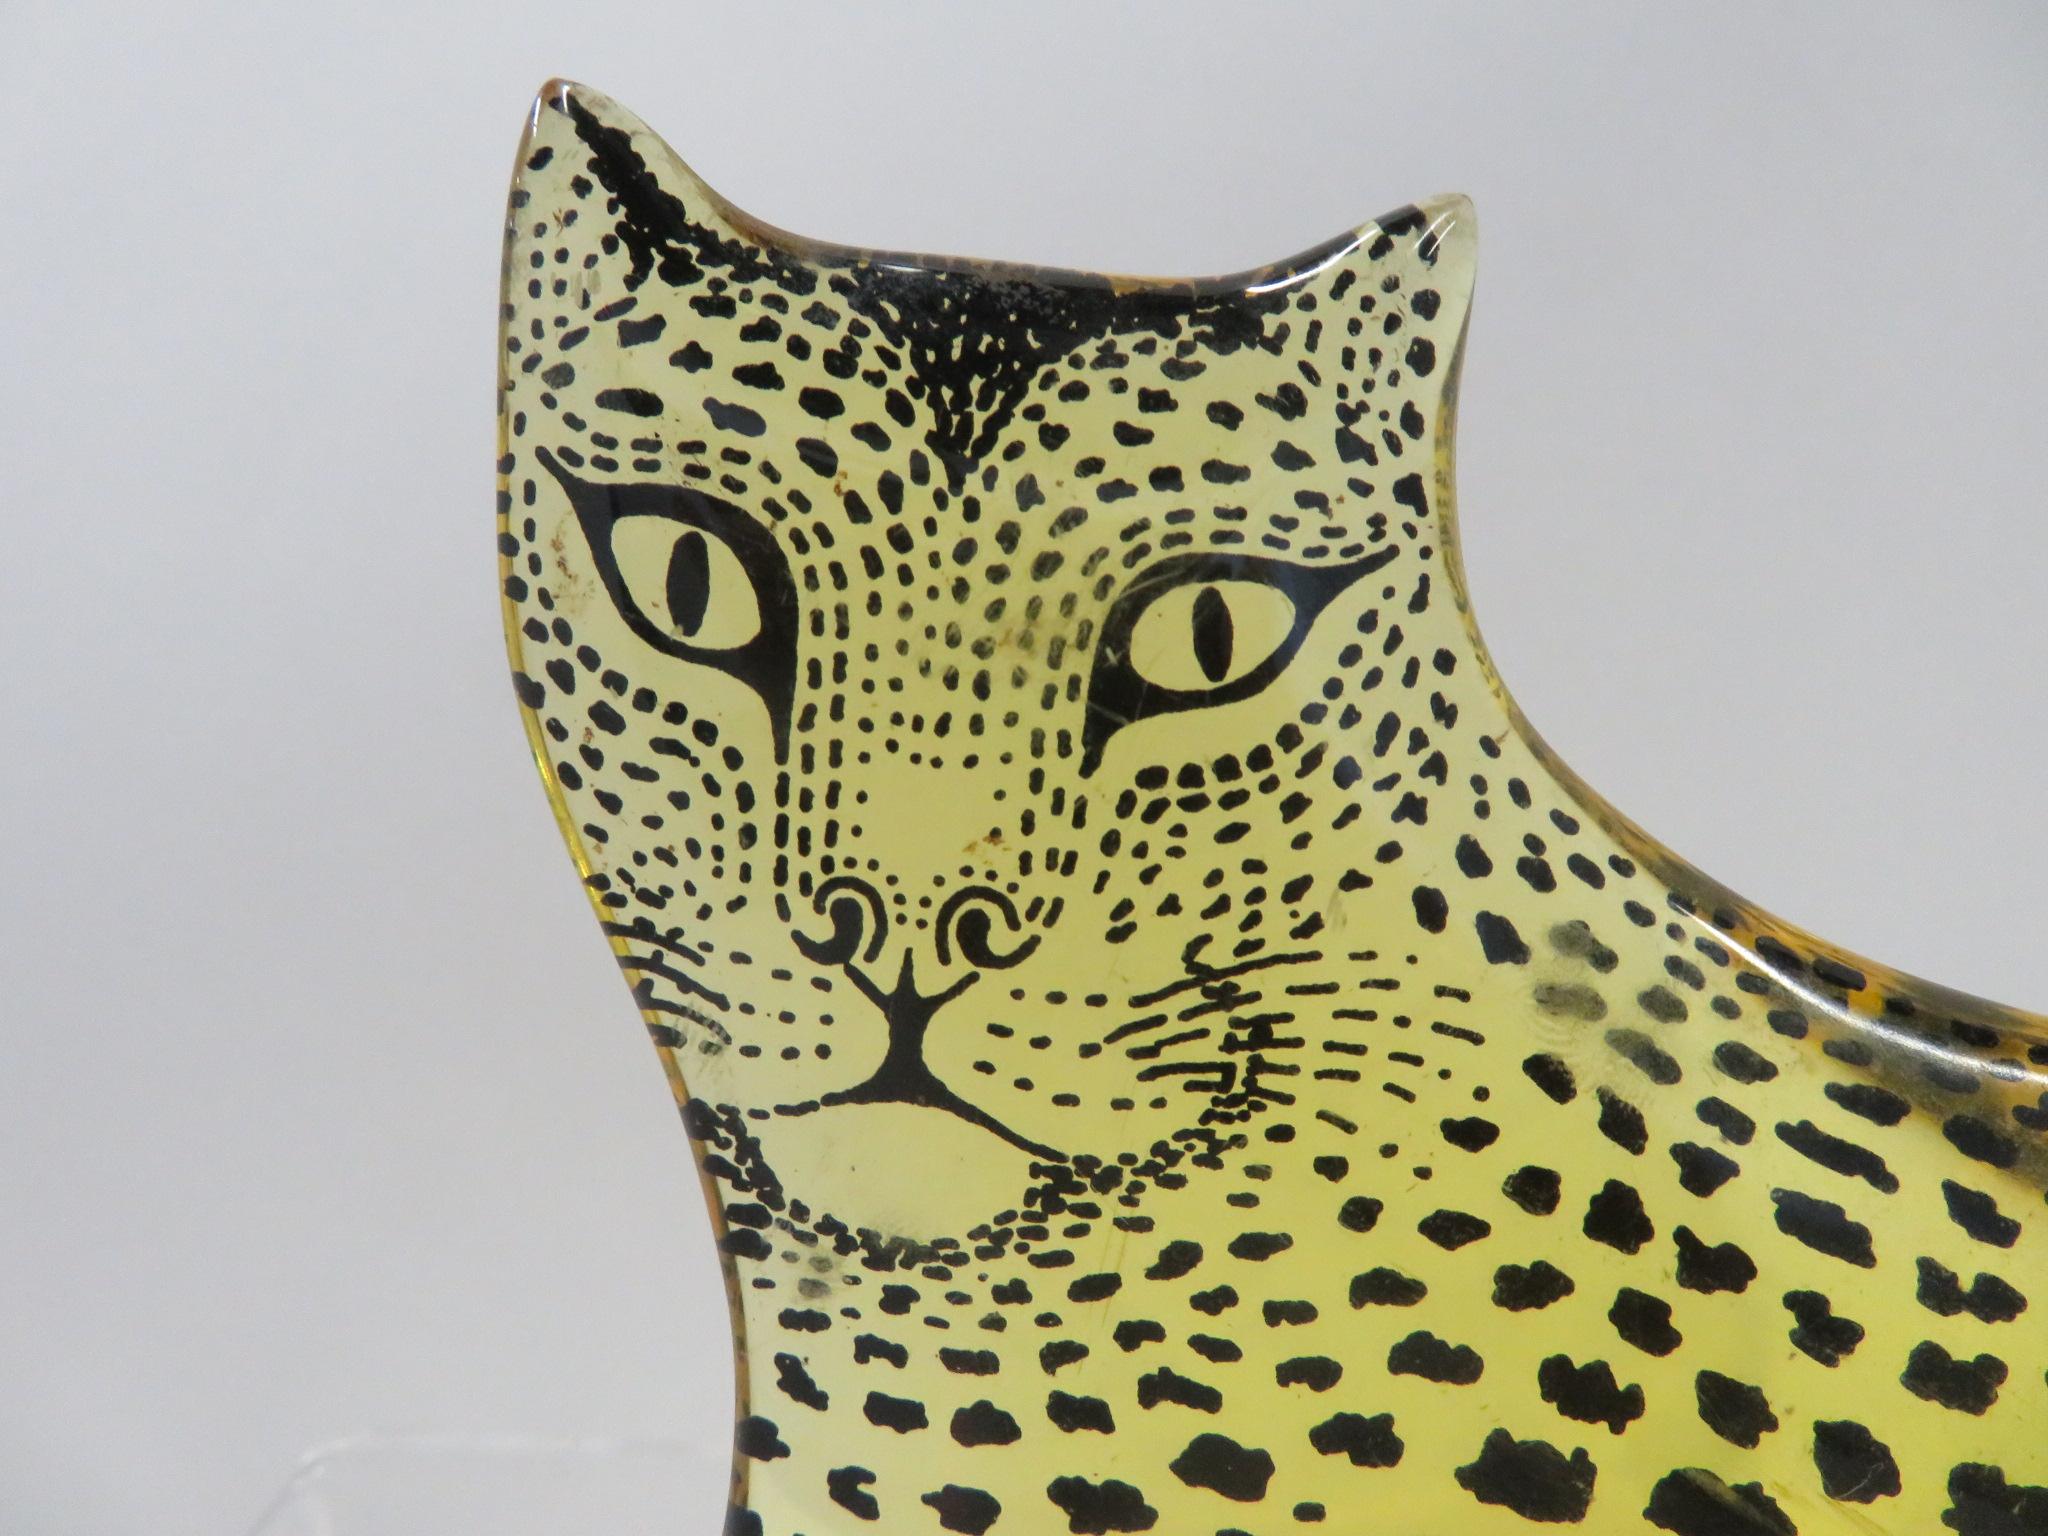 Organic Modern Lucite Leopard Sculpture by Abraham Palatnik Brazil from the Artemis Collection